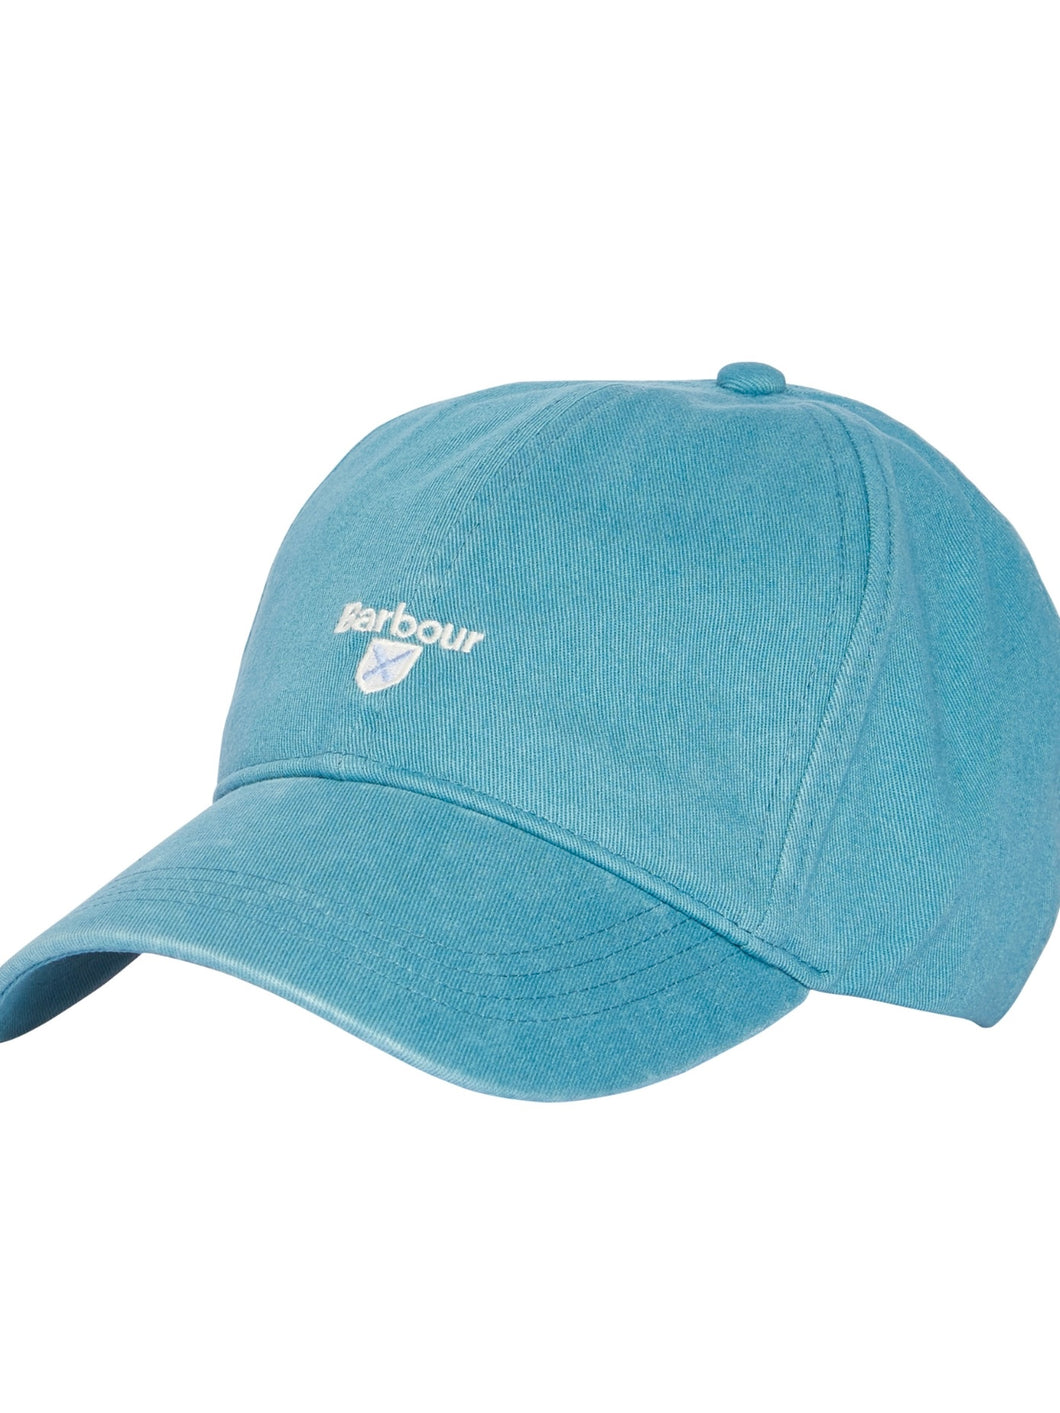 Barbour sports cap